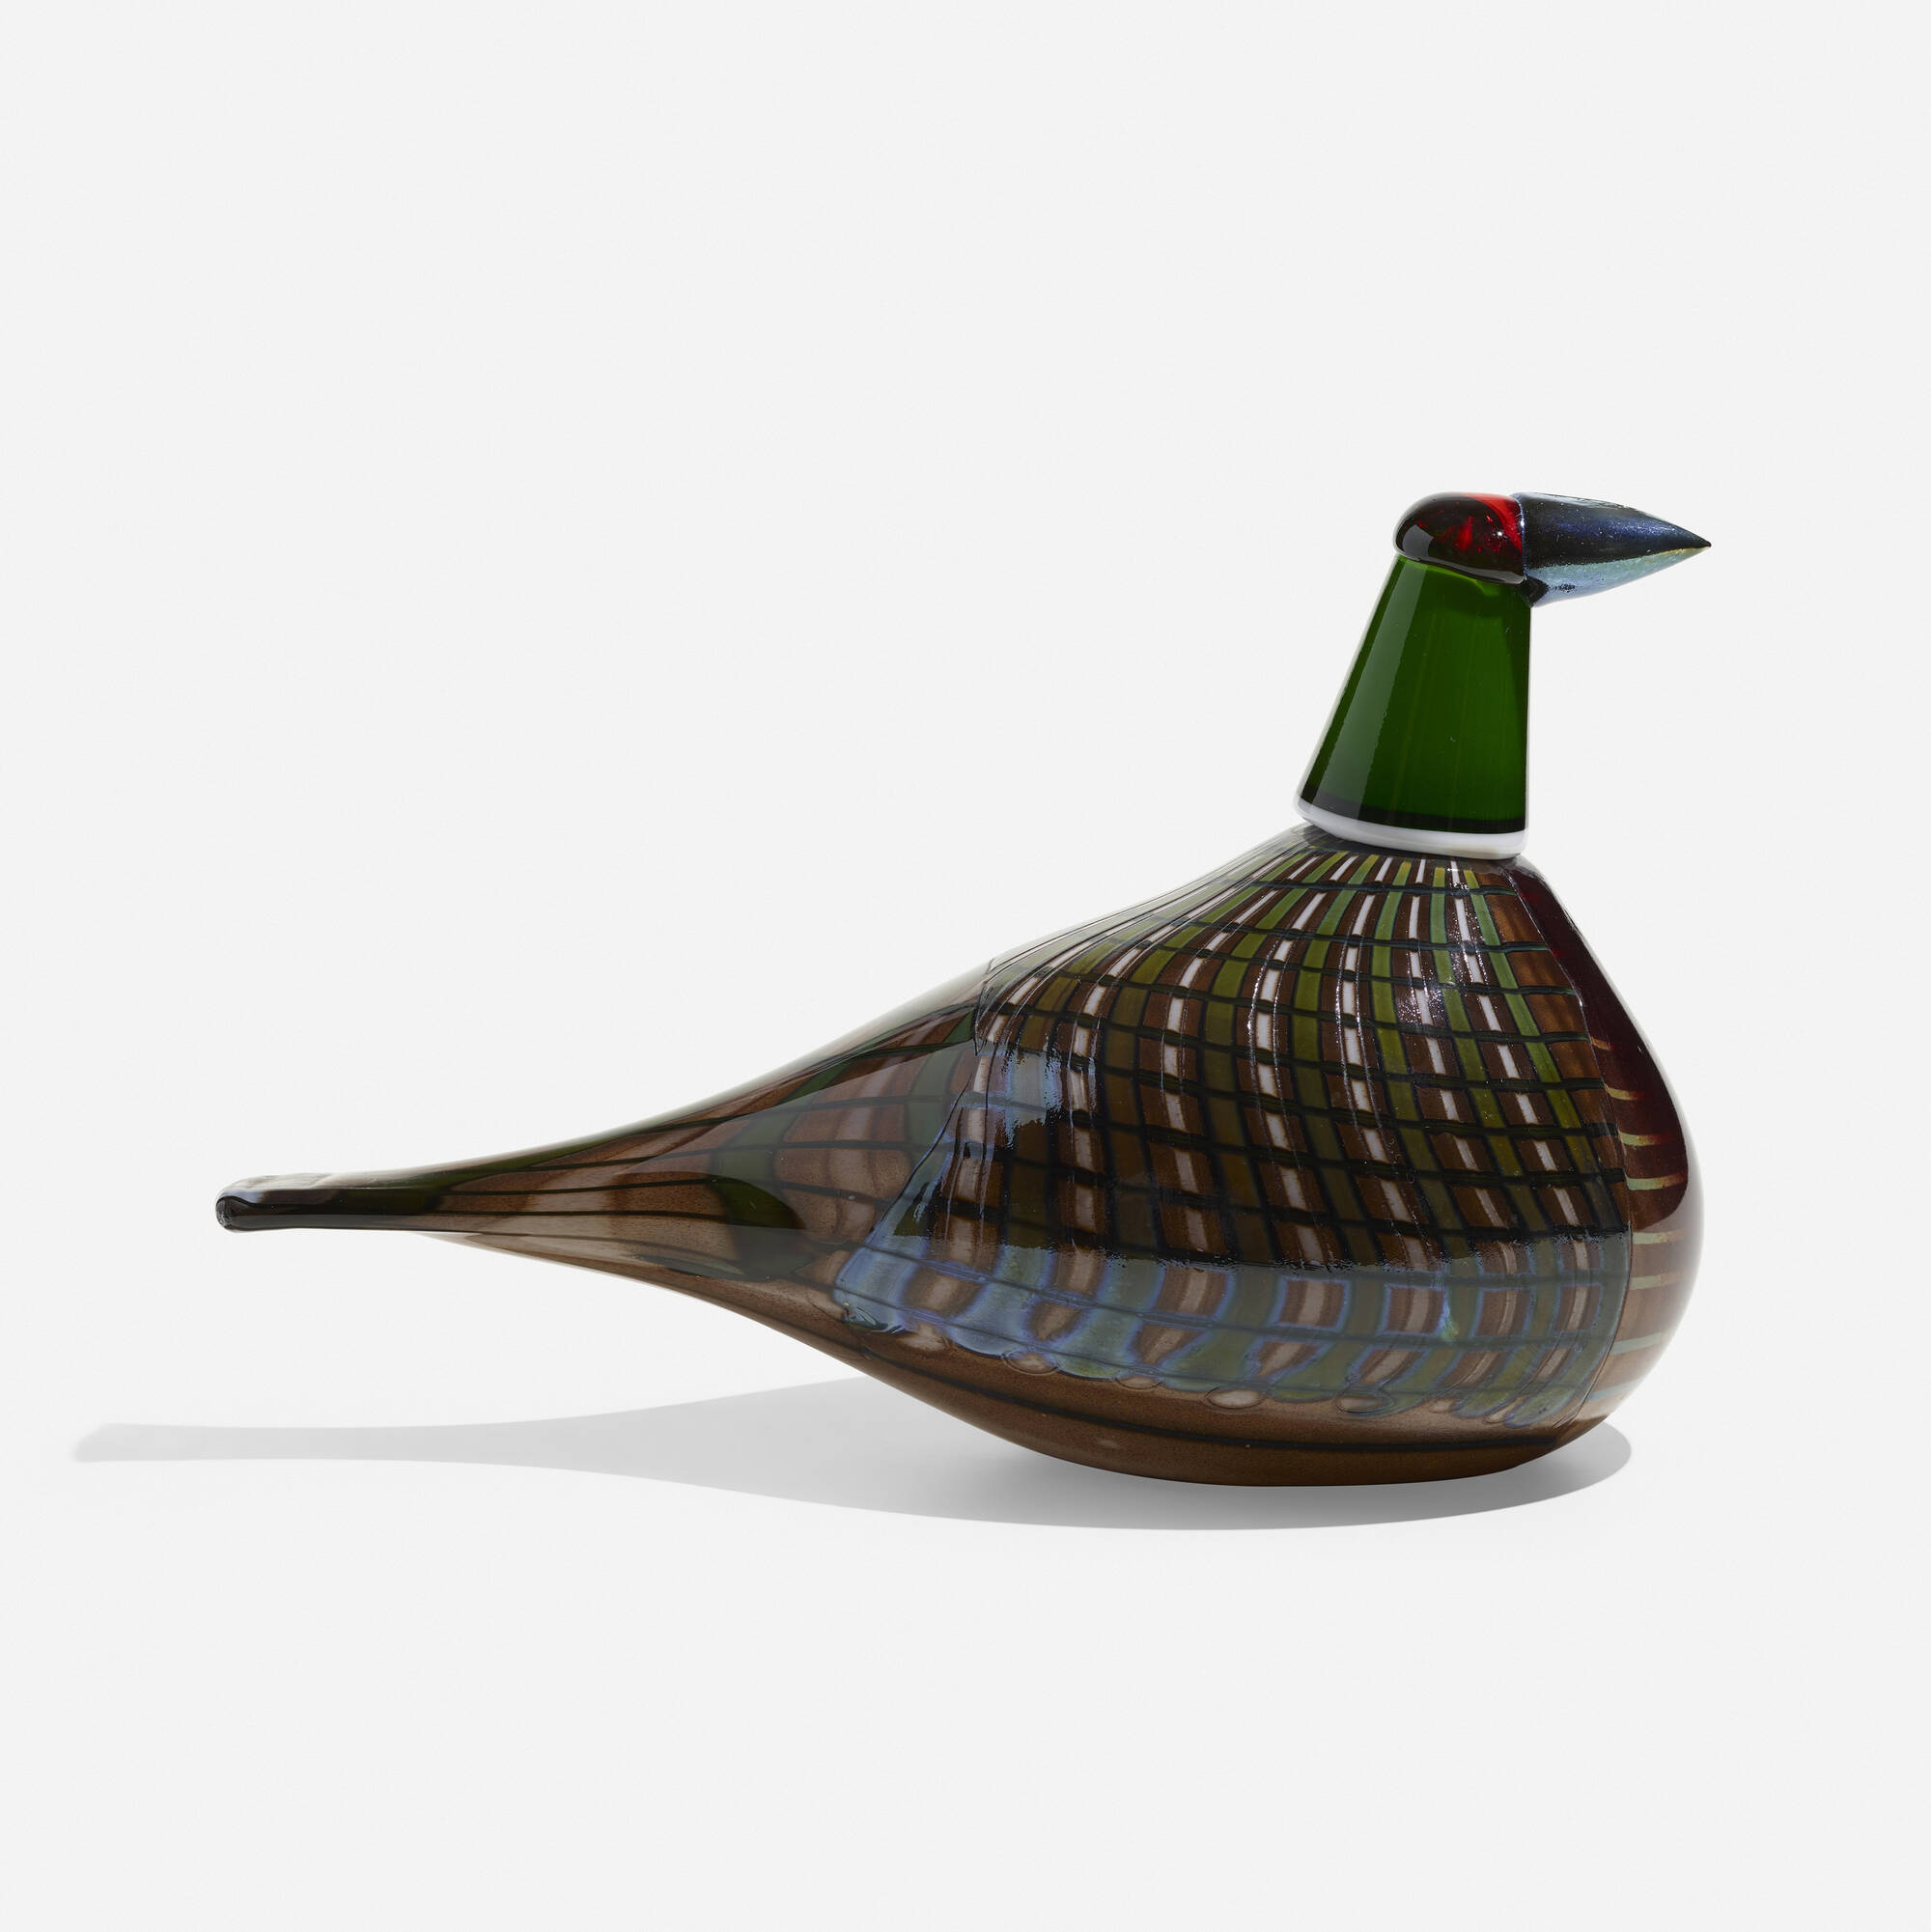 219: OIVA TOIKKA, Festive Pheasant < Scandinavian Design, 23 